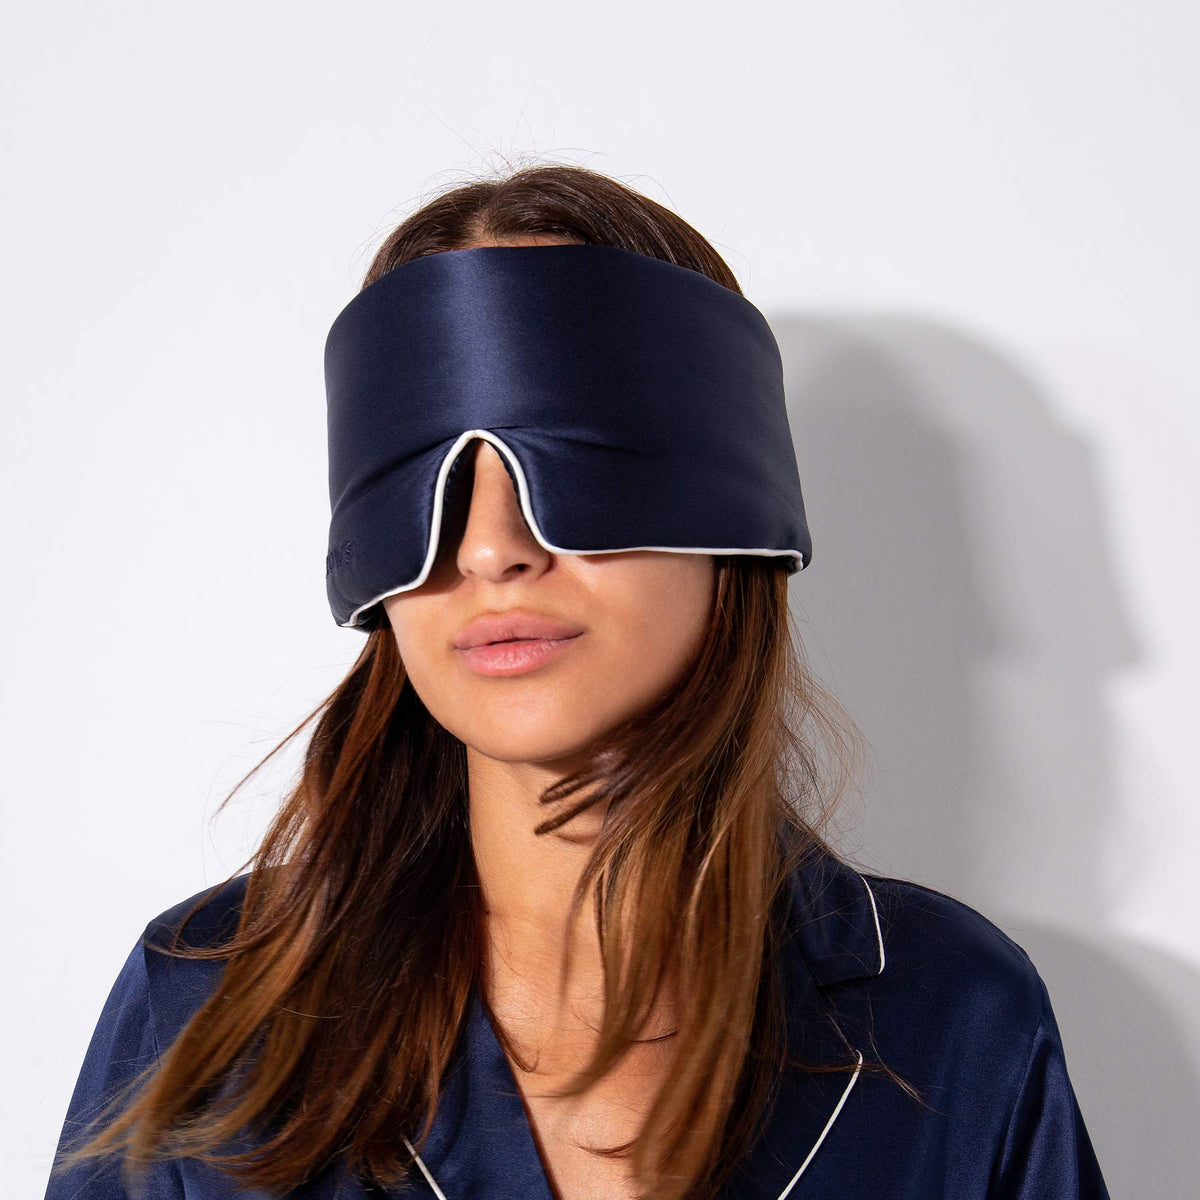 Model blocking out light using Drowsy Sleep Co Silk Mask